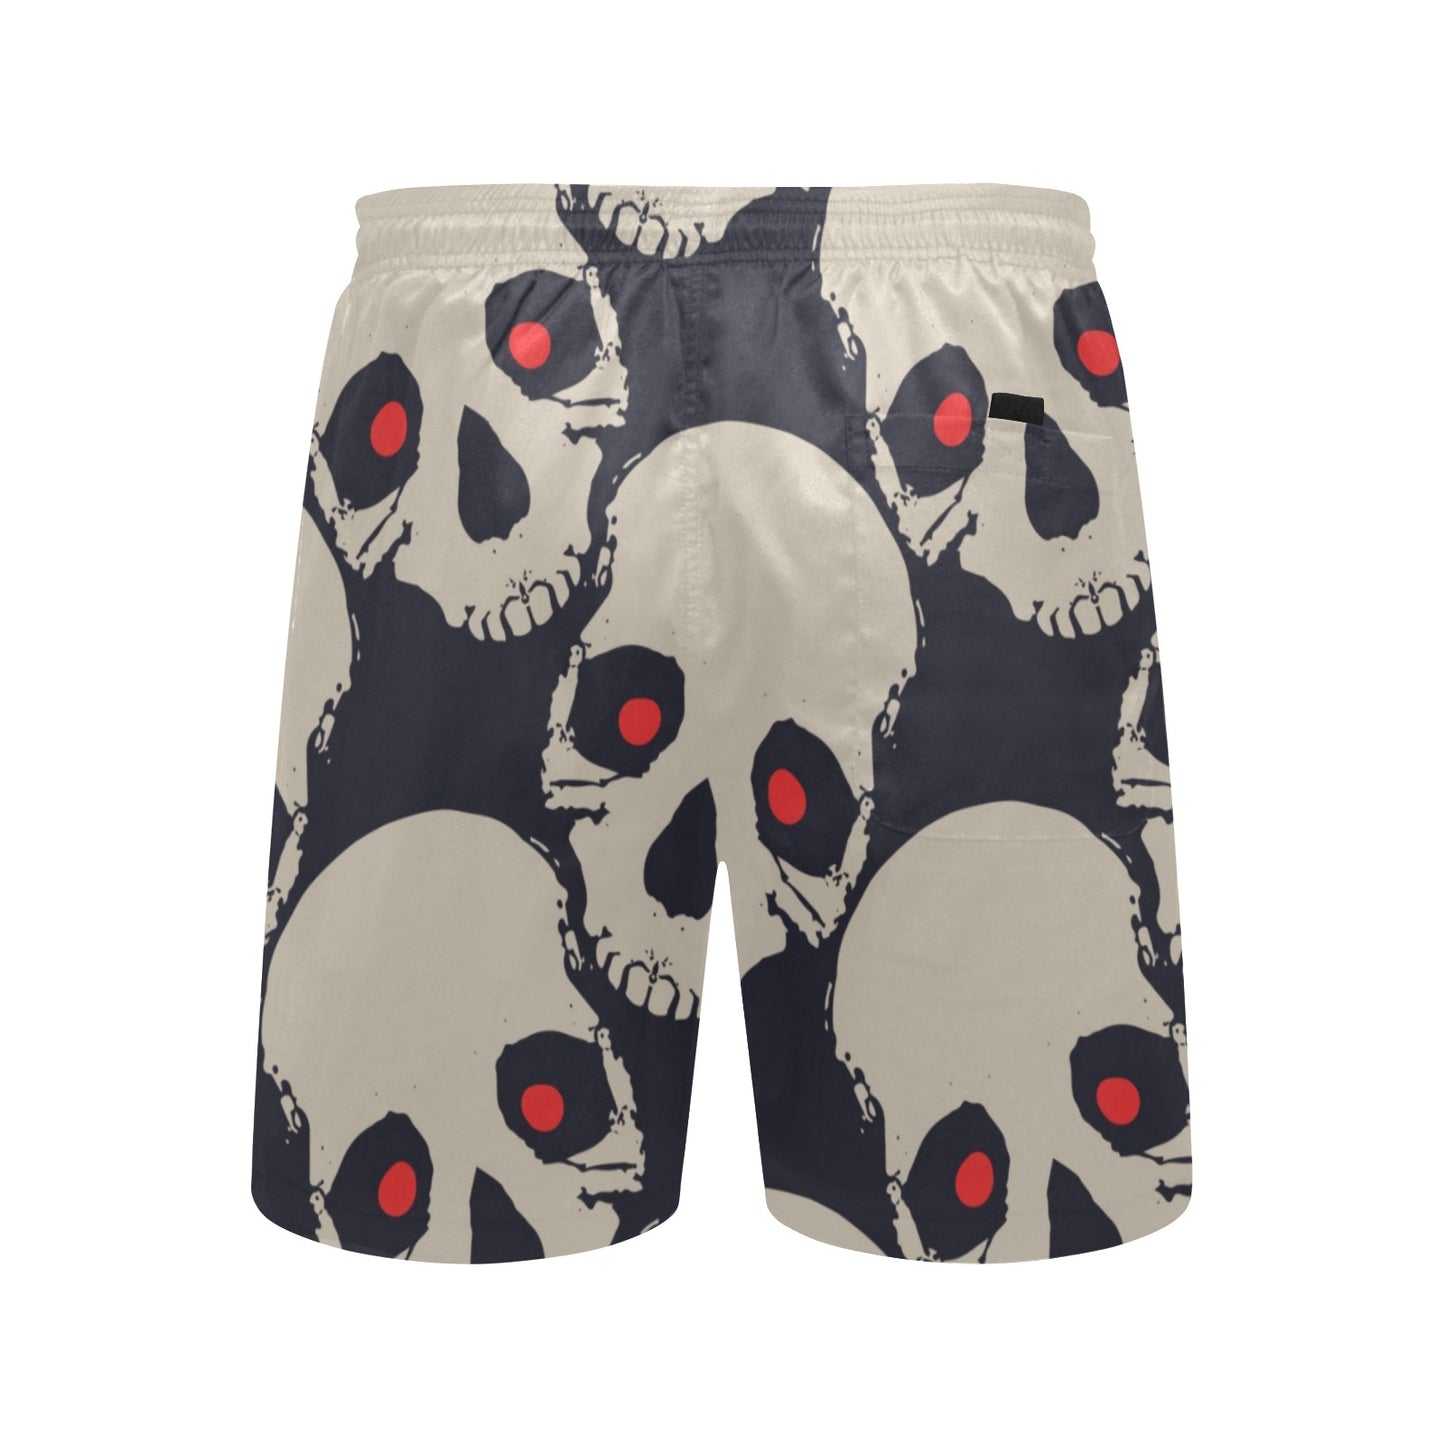 Red Eyed Skulls Beach Shorts